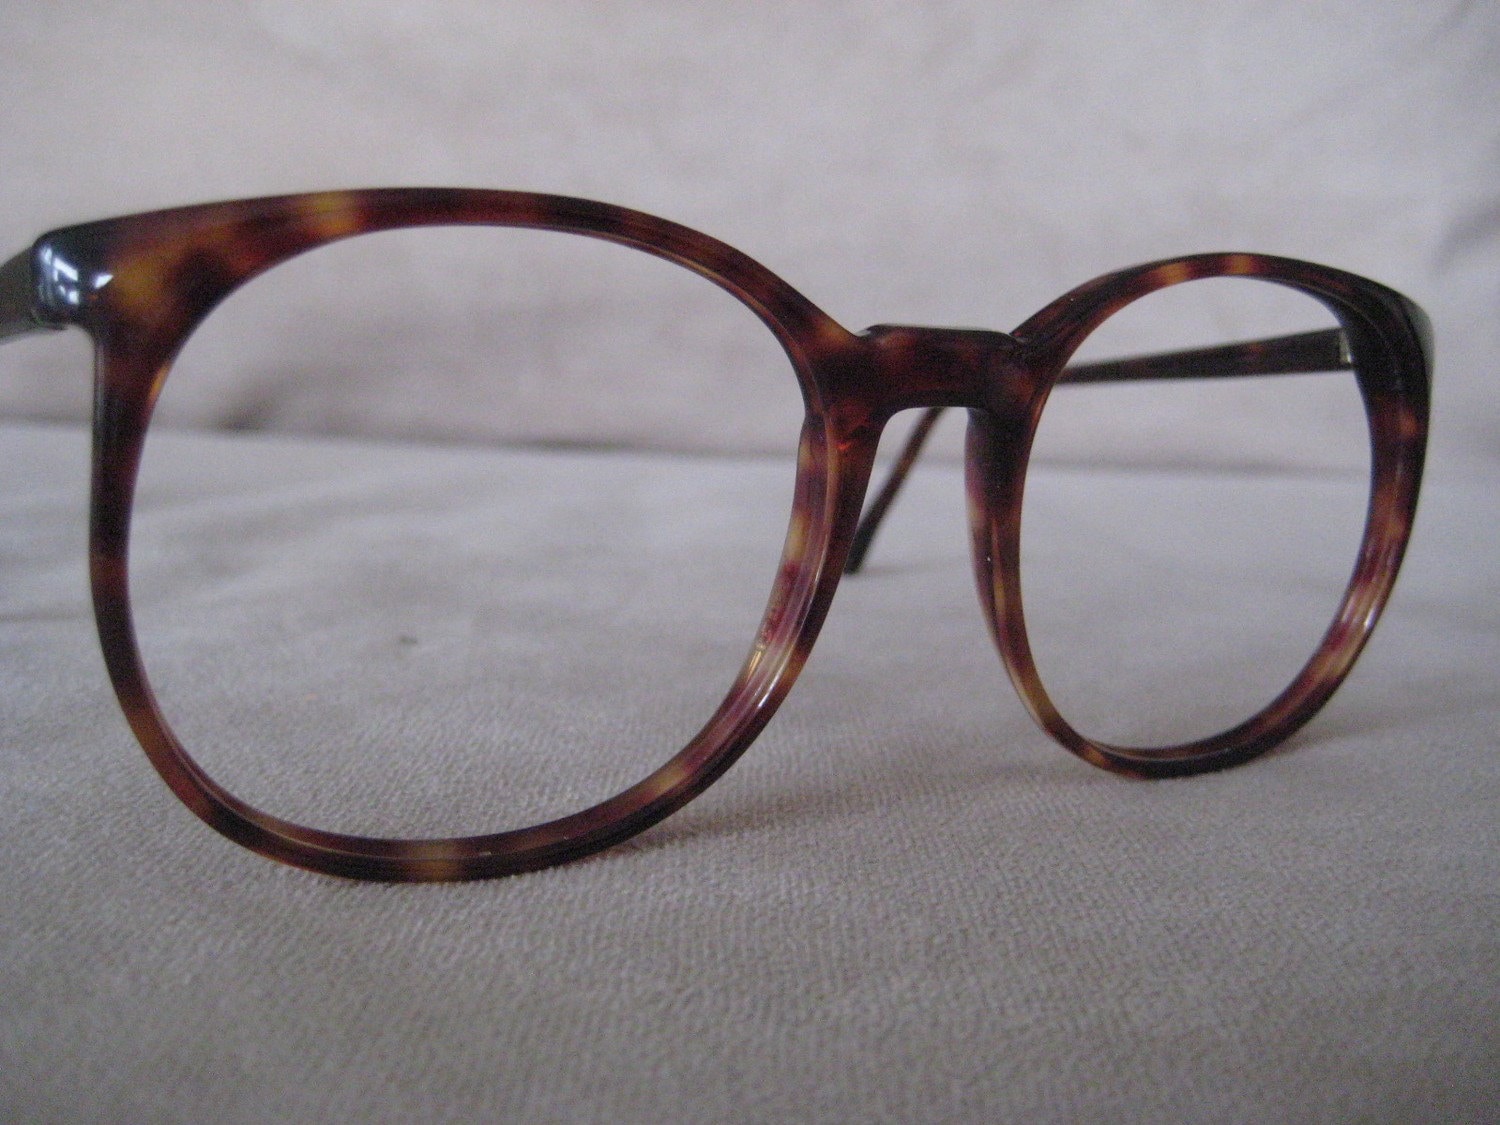 Ralph Lauren Polo Tortoise Shell eyeglasses/sunglasses by atrickey